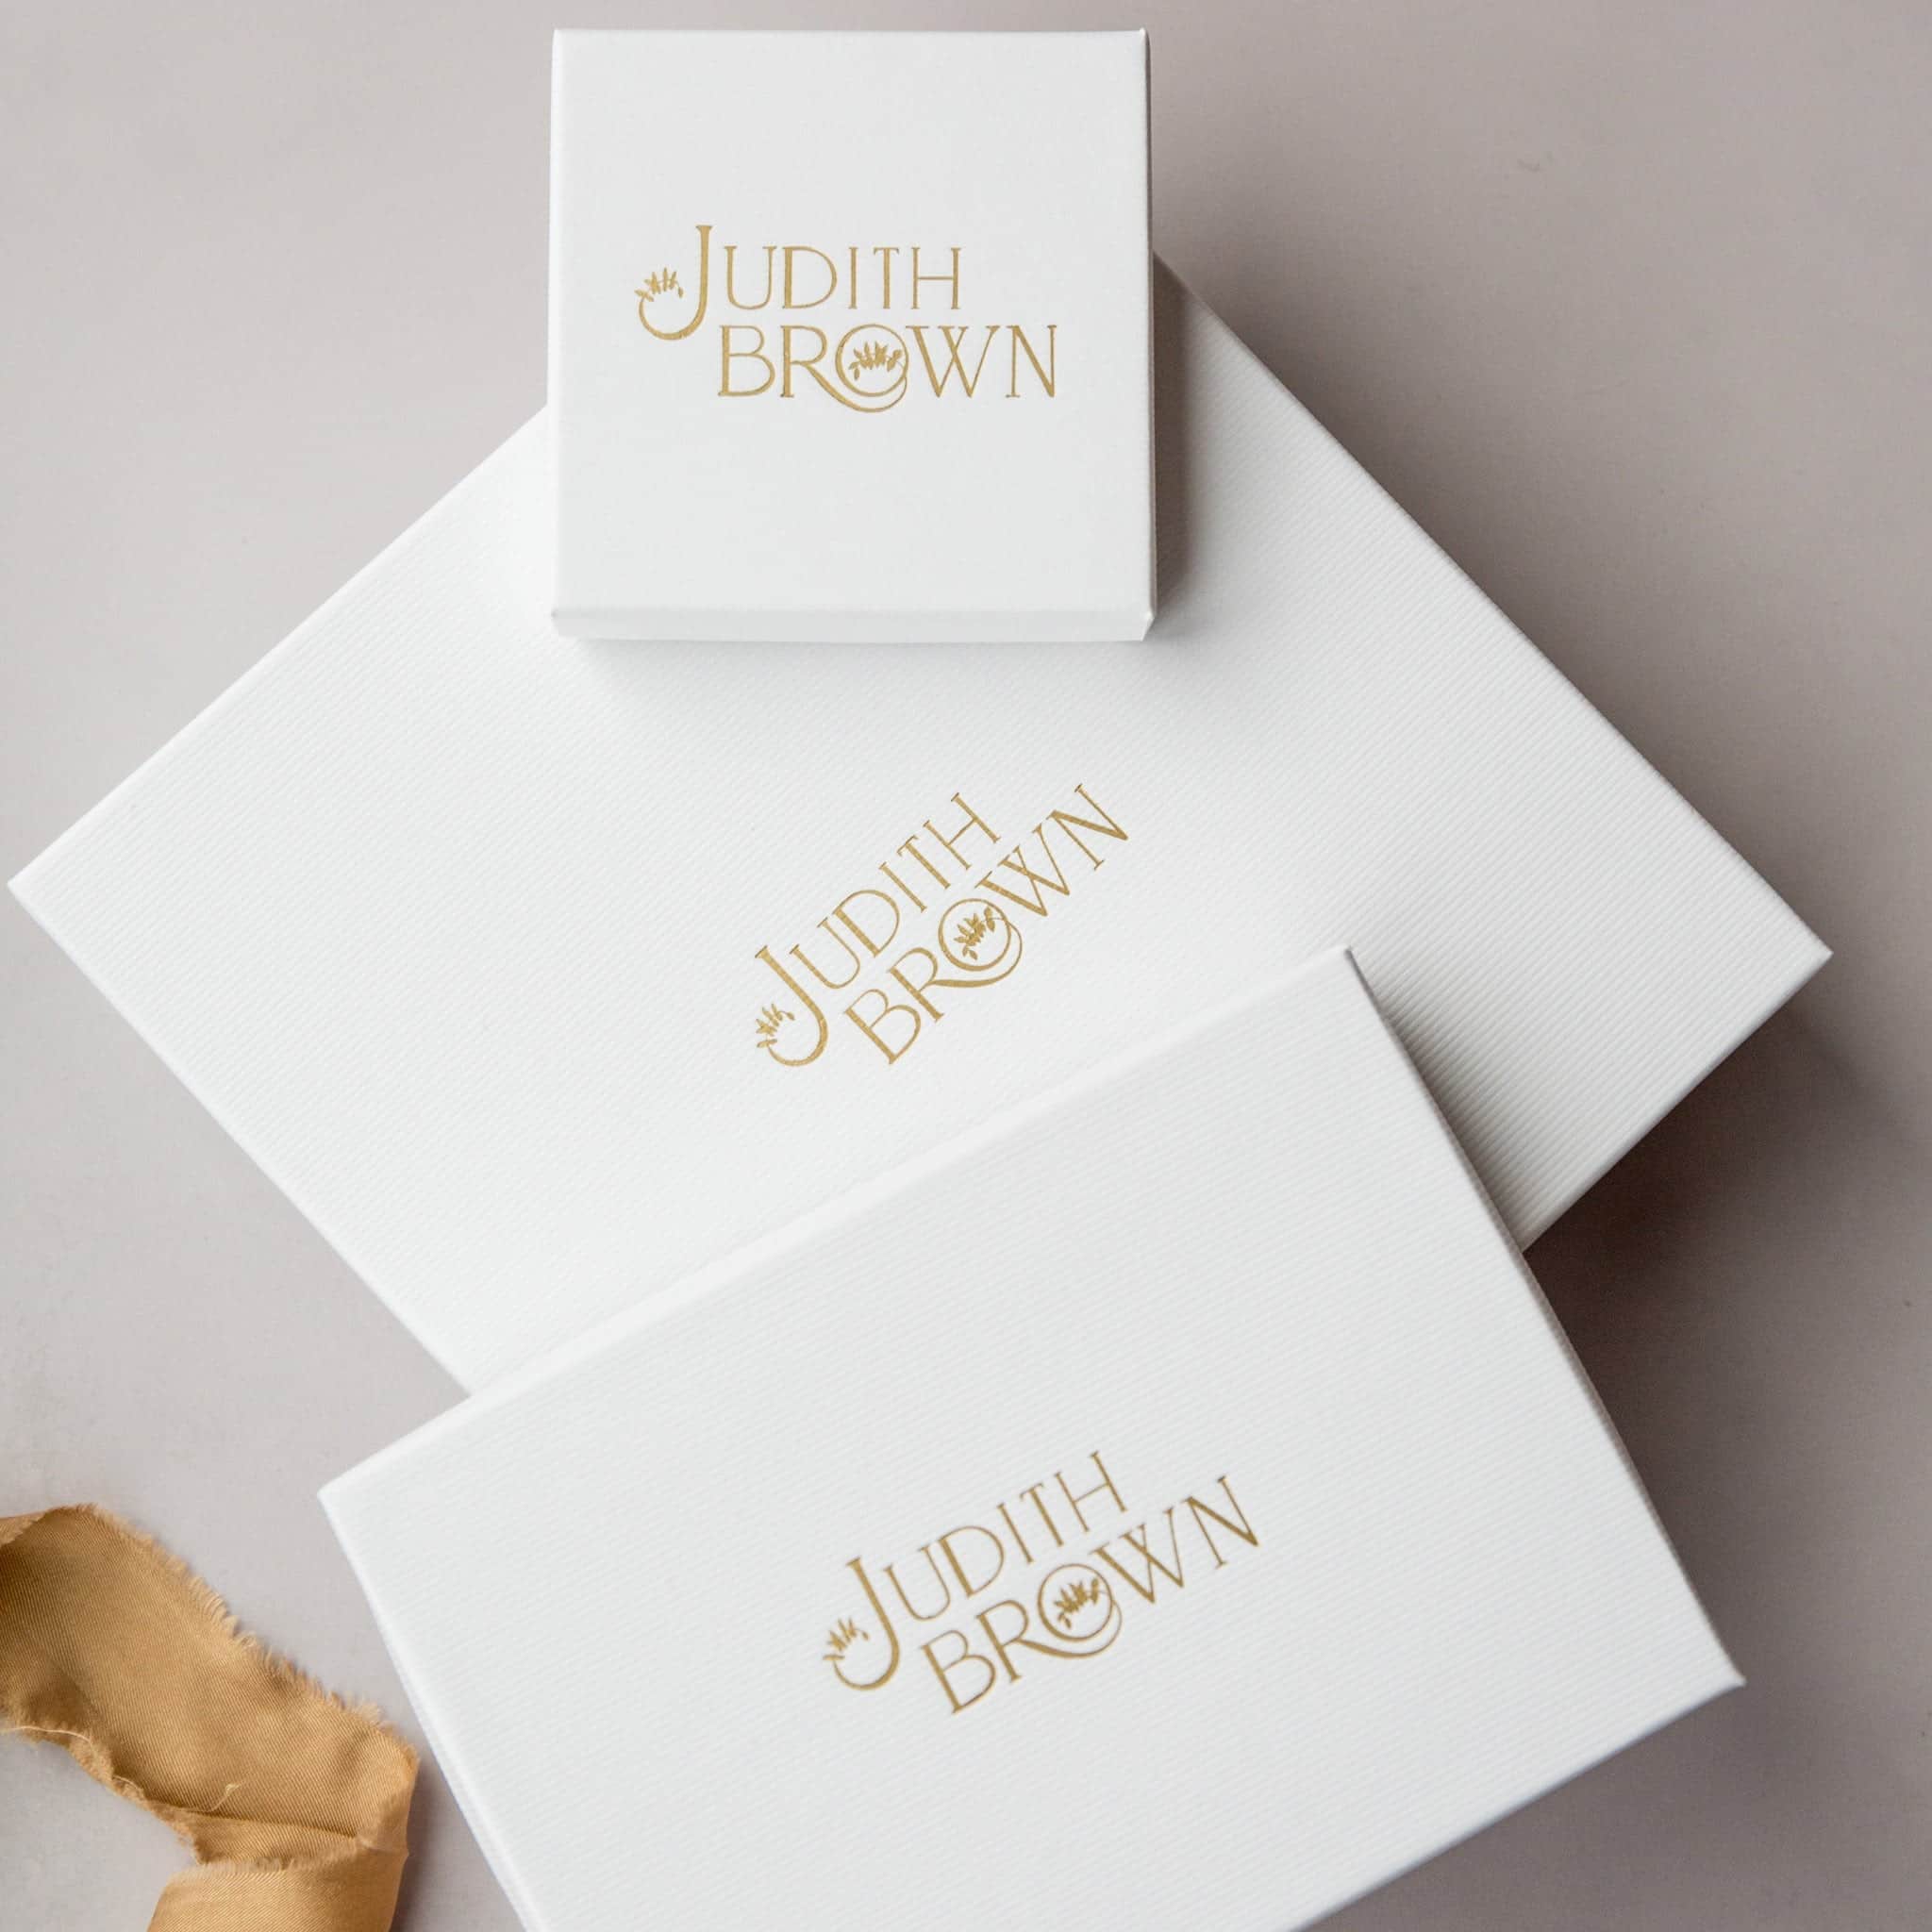 Judith Brown Bridal Gift boxes